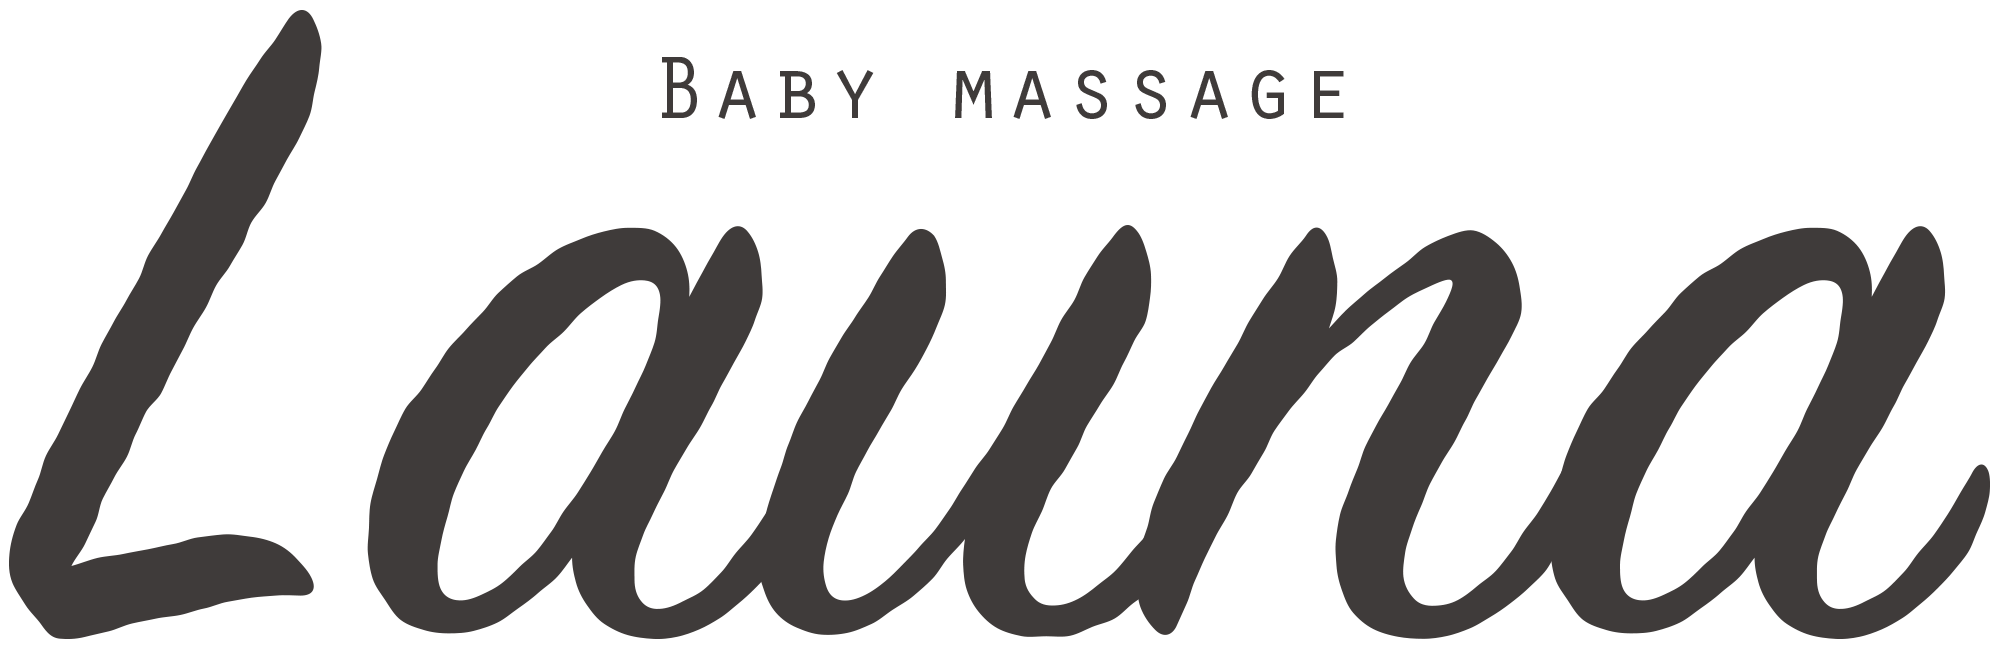 Launa Baby Massage